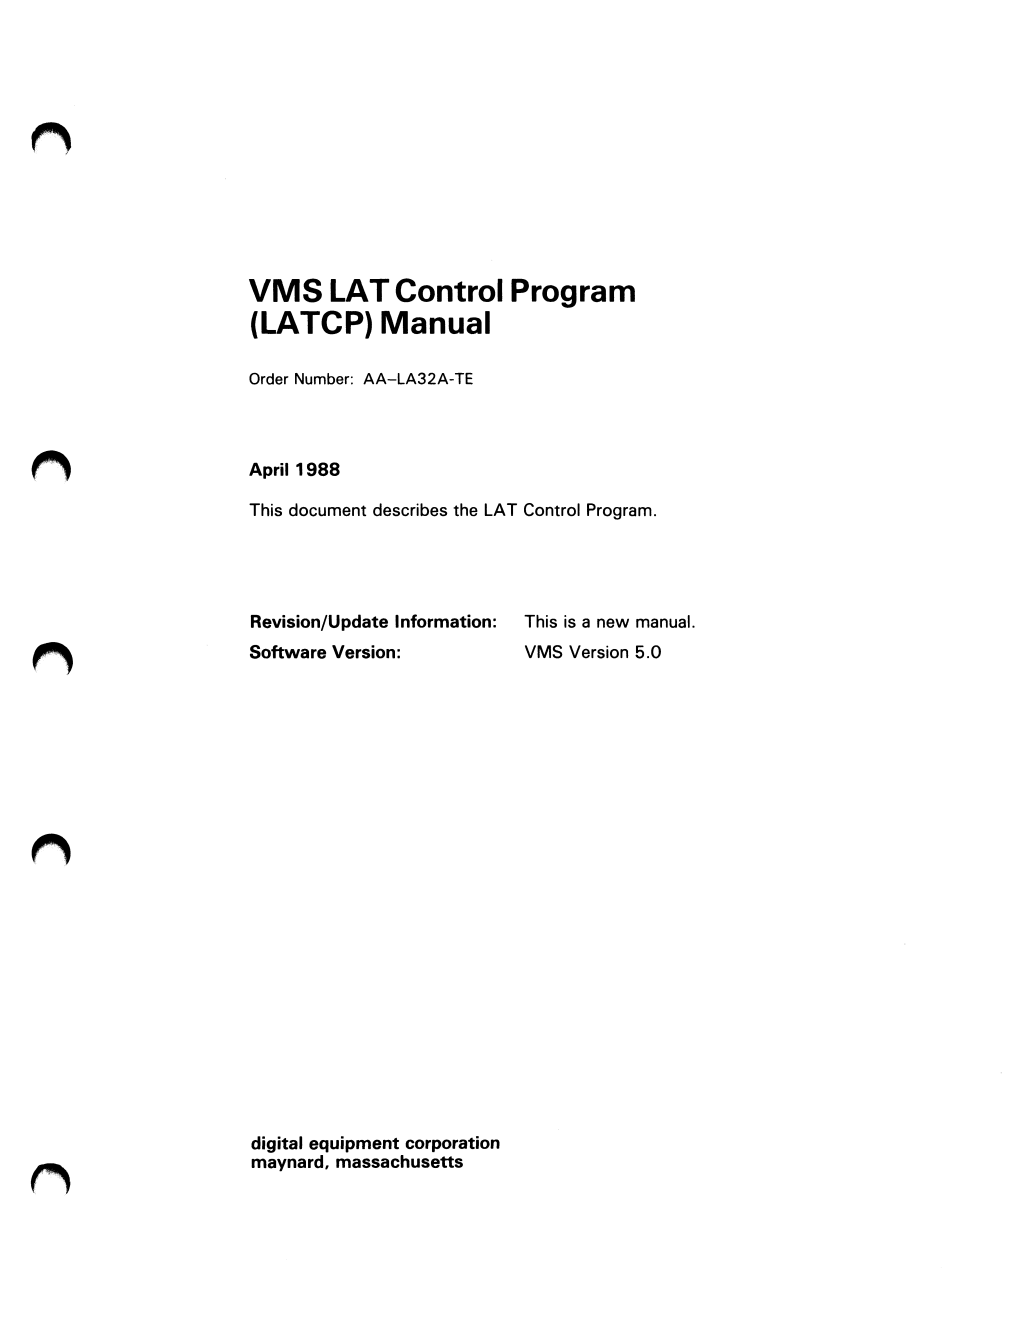 VMS LAT Control Program (LATCP)Manual